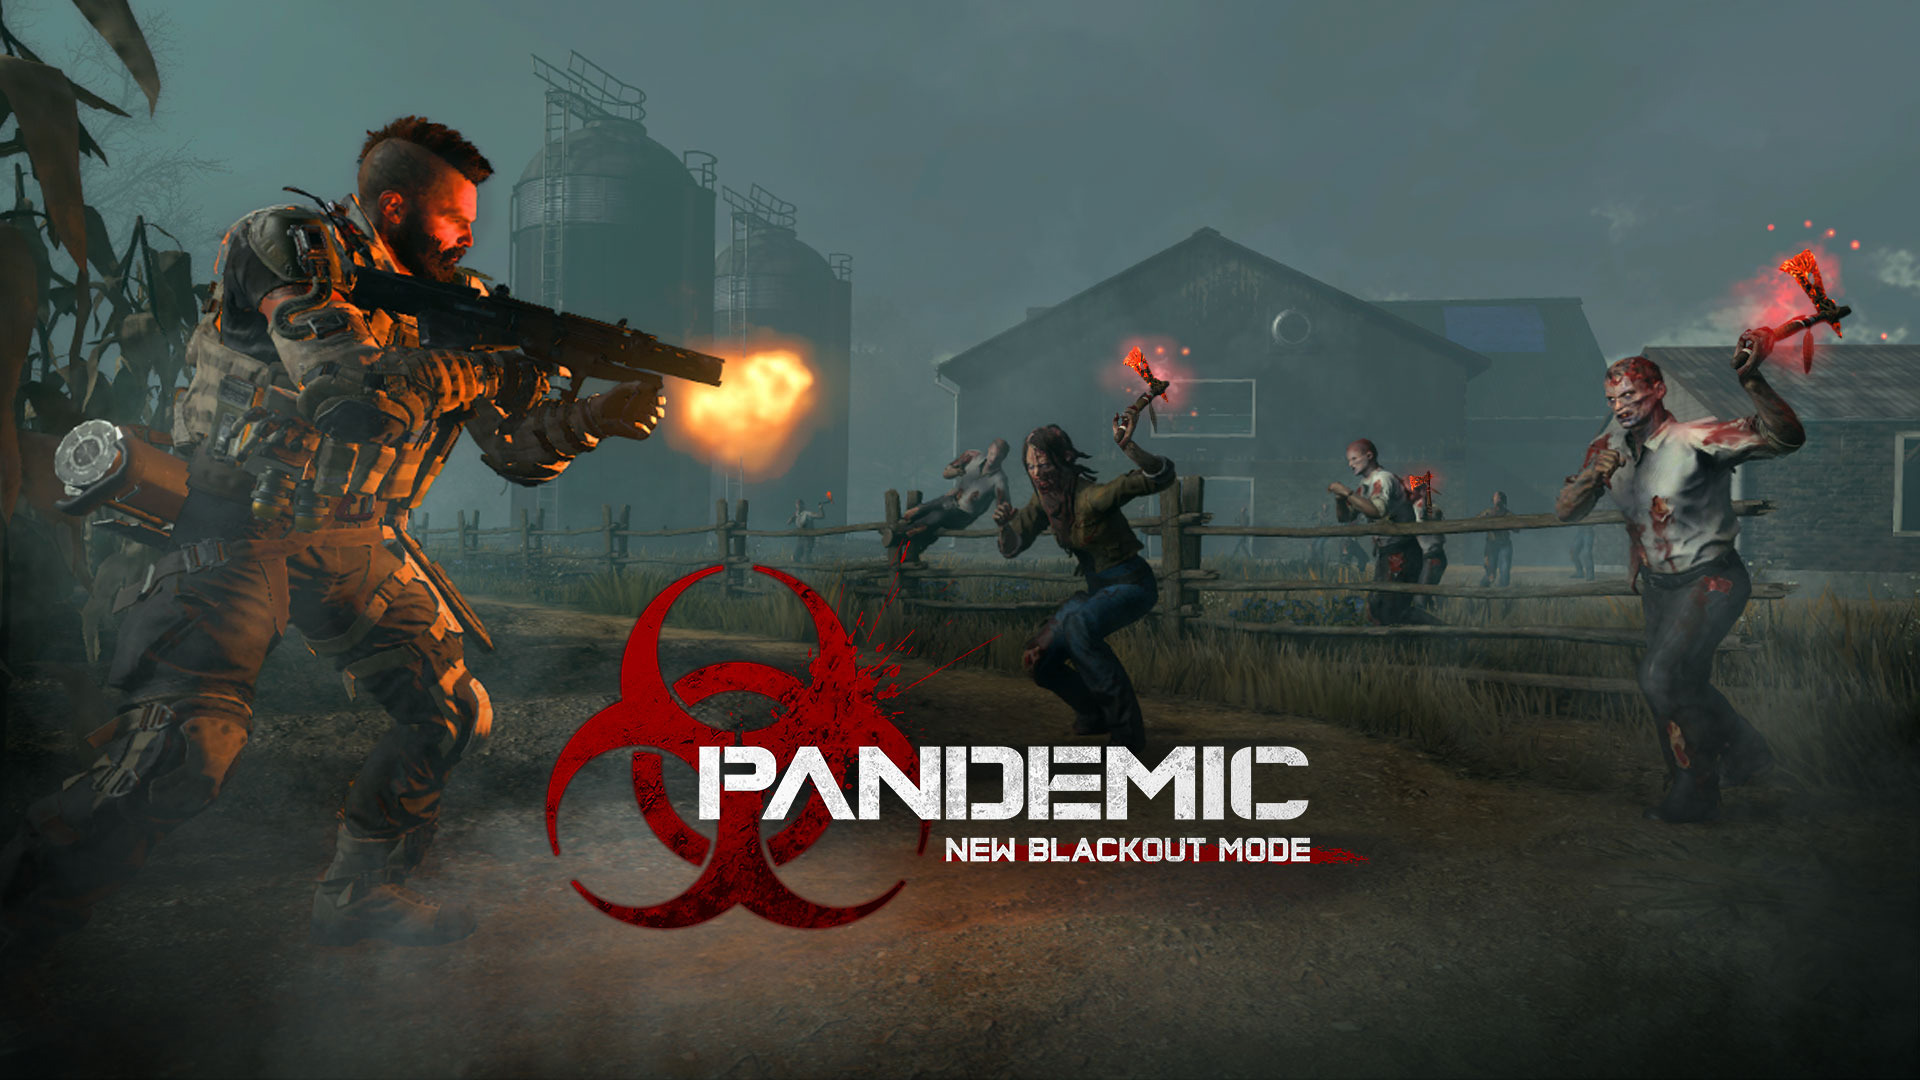 Cod Bo4 Blackout新モード Pandemic がps4で登場 倒されたプレイヤーがゾンビに Game Spark 国内 海外ゲーム情報サイト